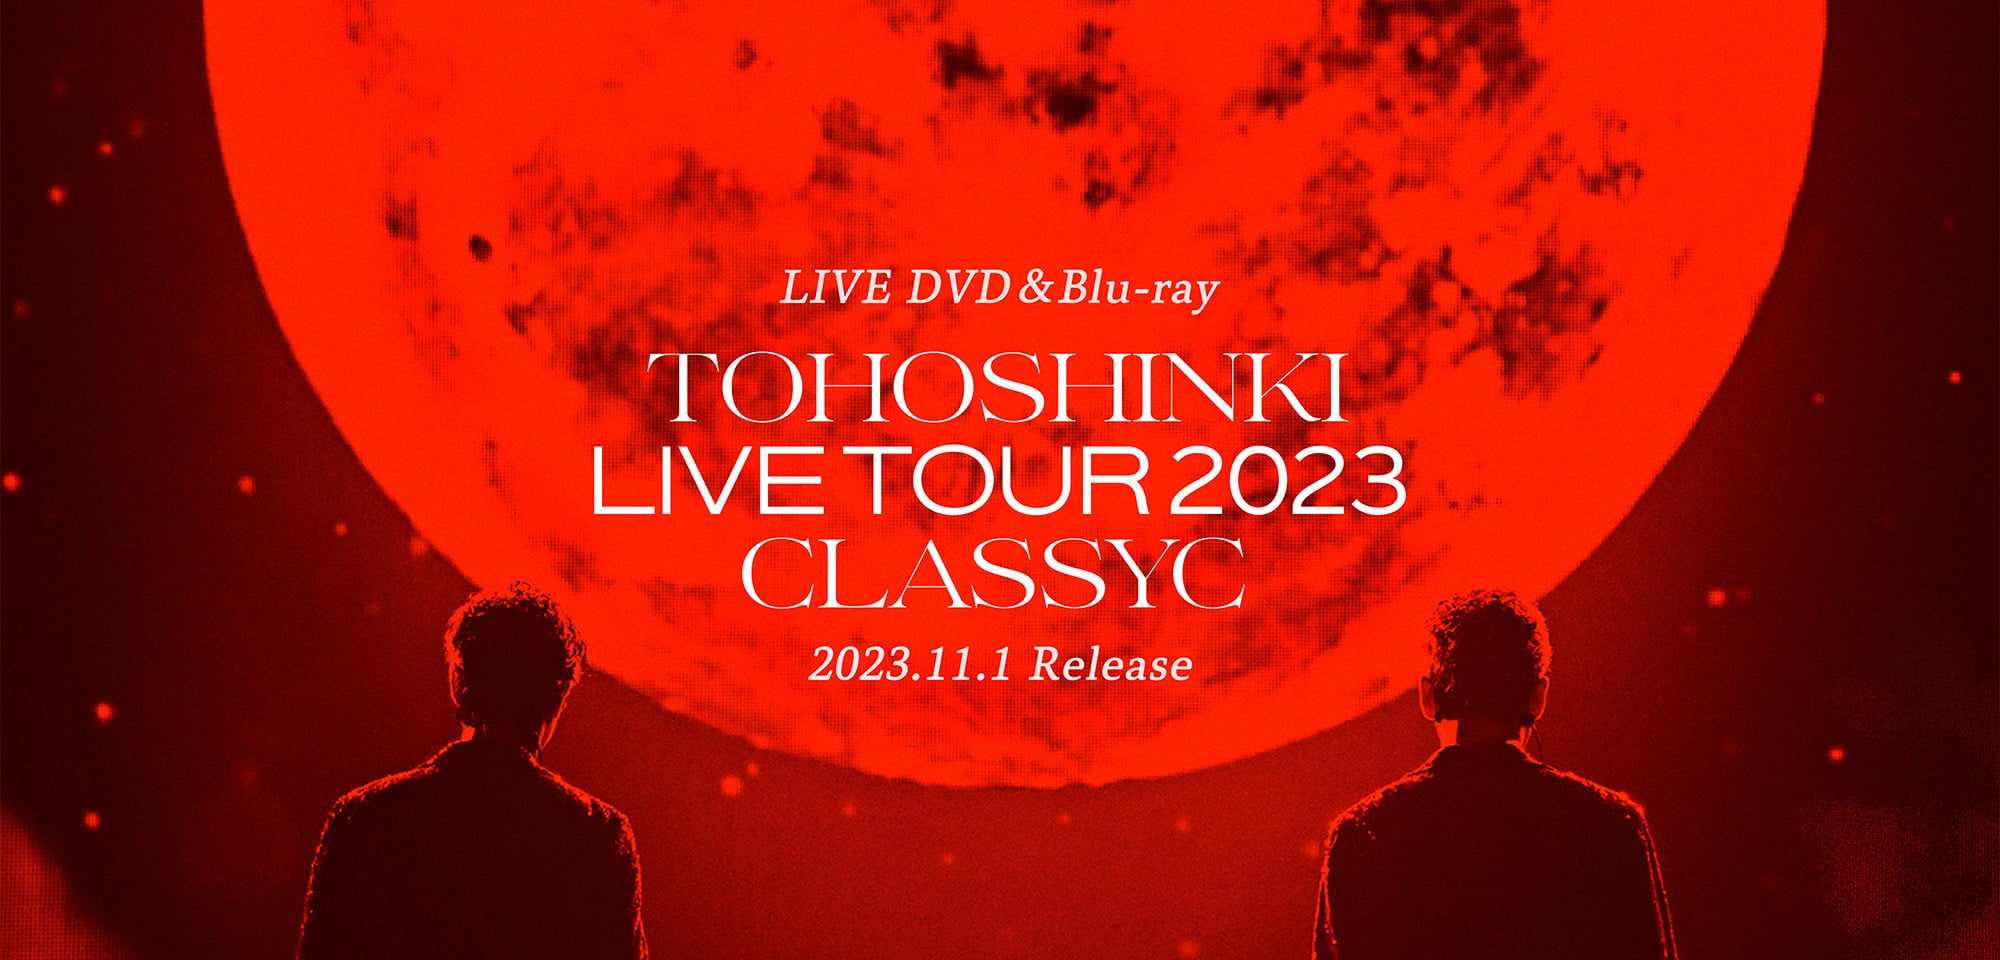 LIVE DVD & Blu-ray “TOHOSHINKI LIVE TOUR 2023 CLASSYC” 2023.11.1 Release